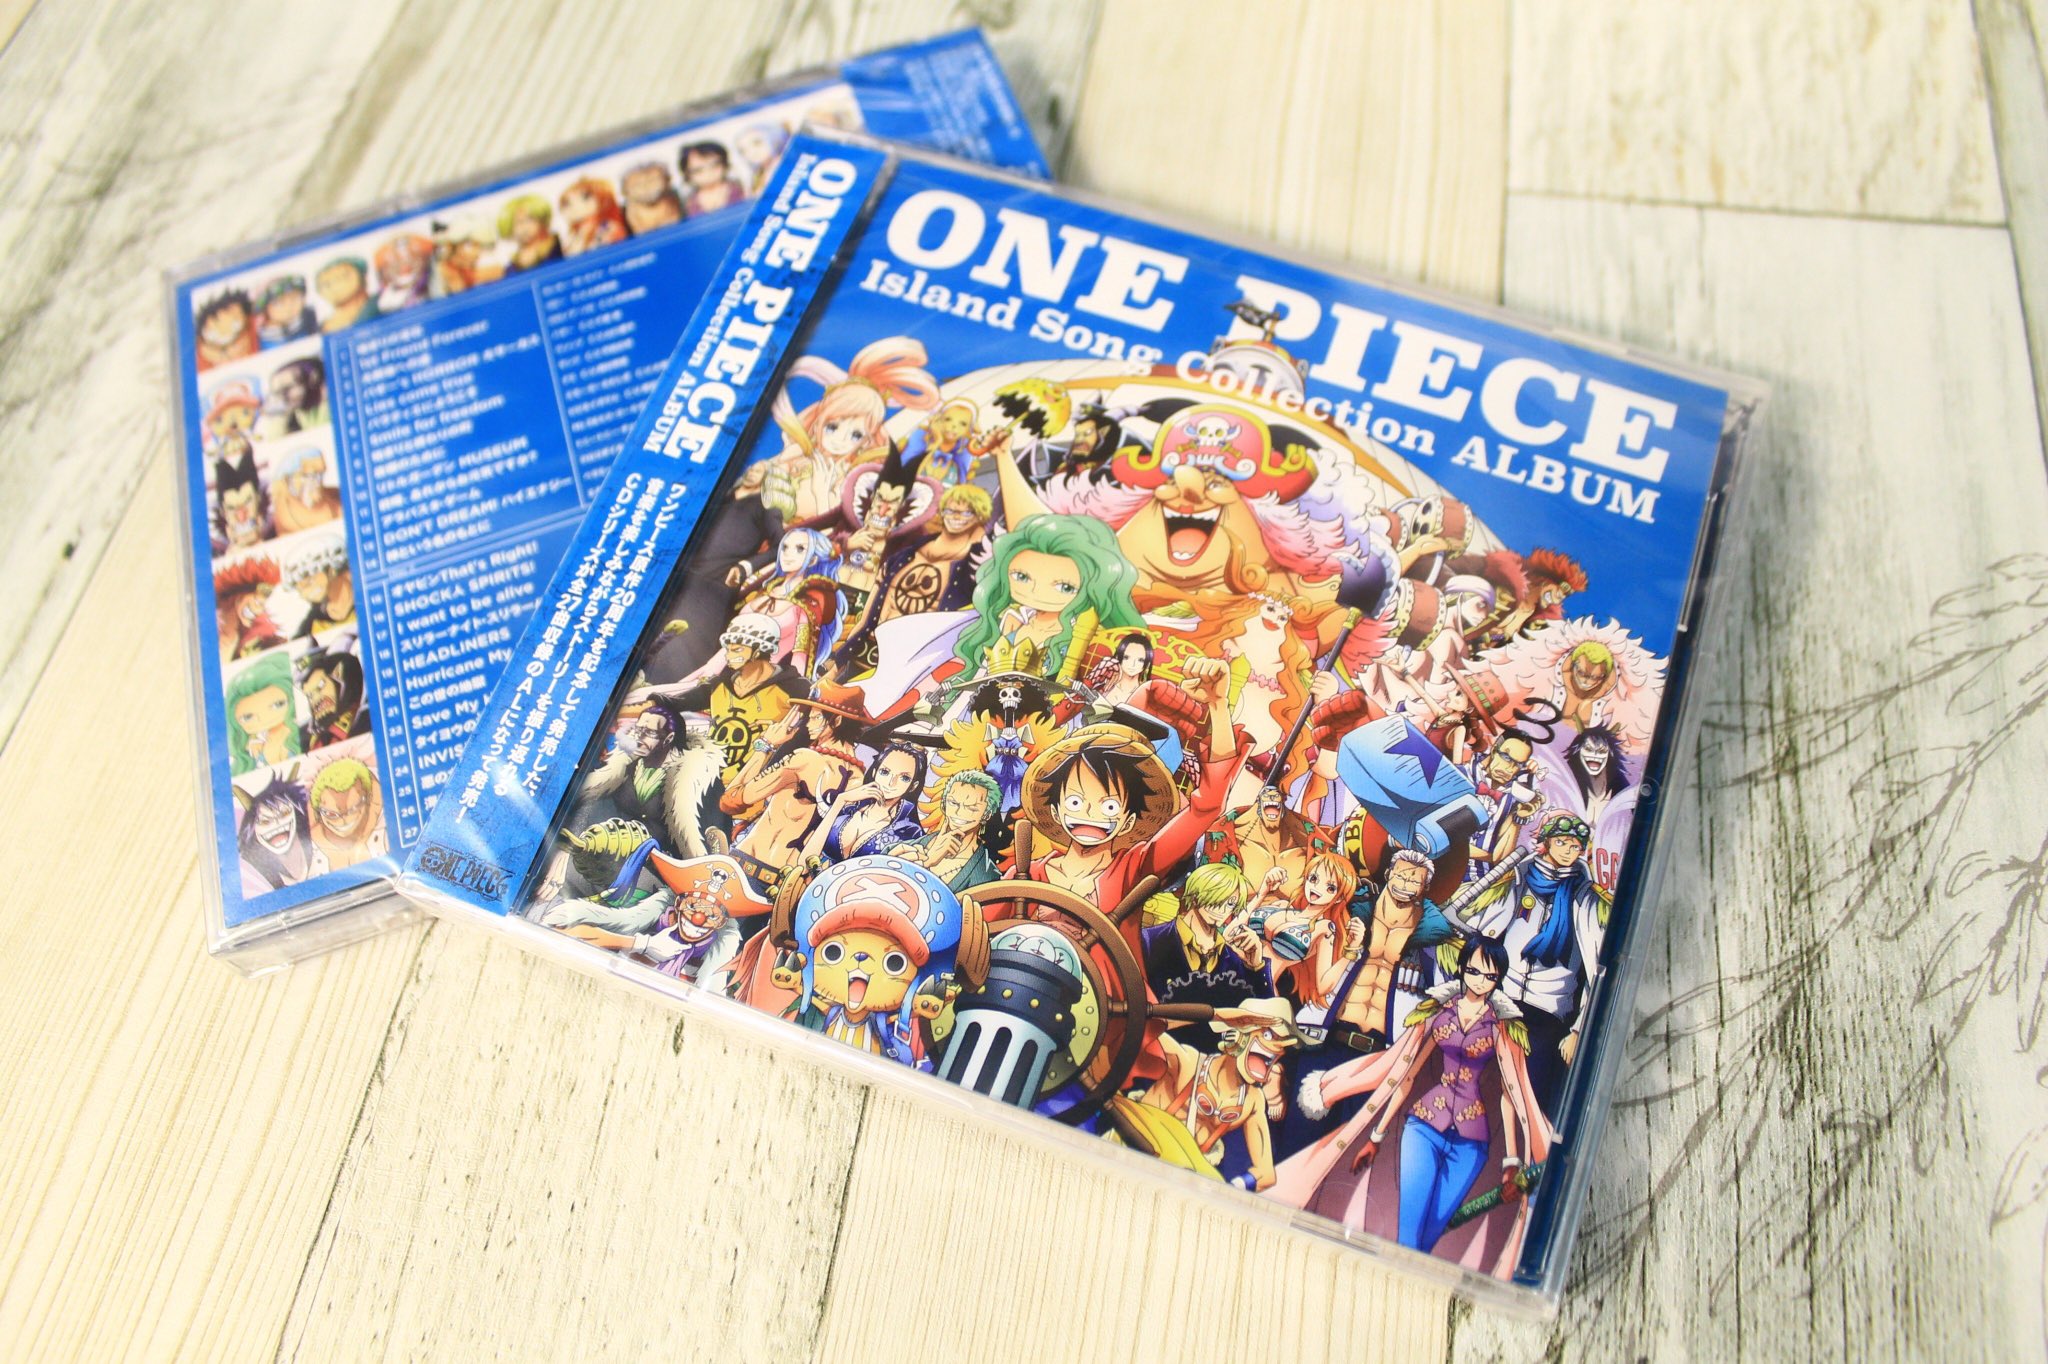 ট ইট র One Piece麦わらストア渋谷本店 おすすめ One Piece Island Song Collection Album 3 500円 税 好評発売中 麦わらストア Onepiece